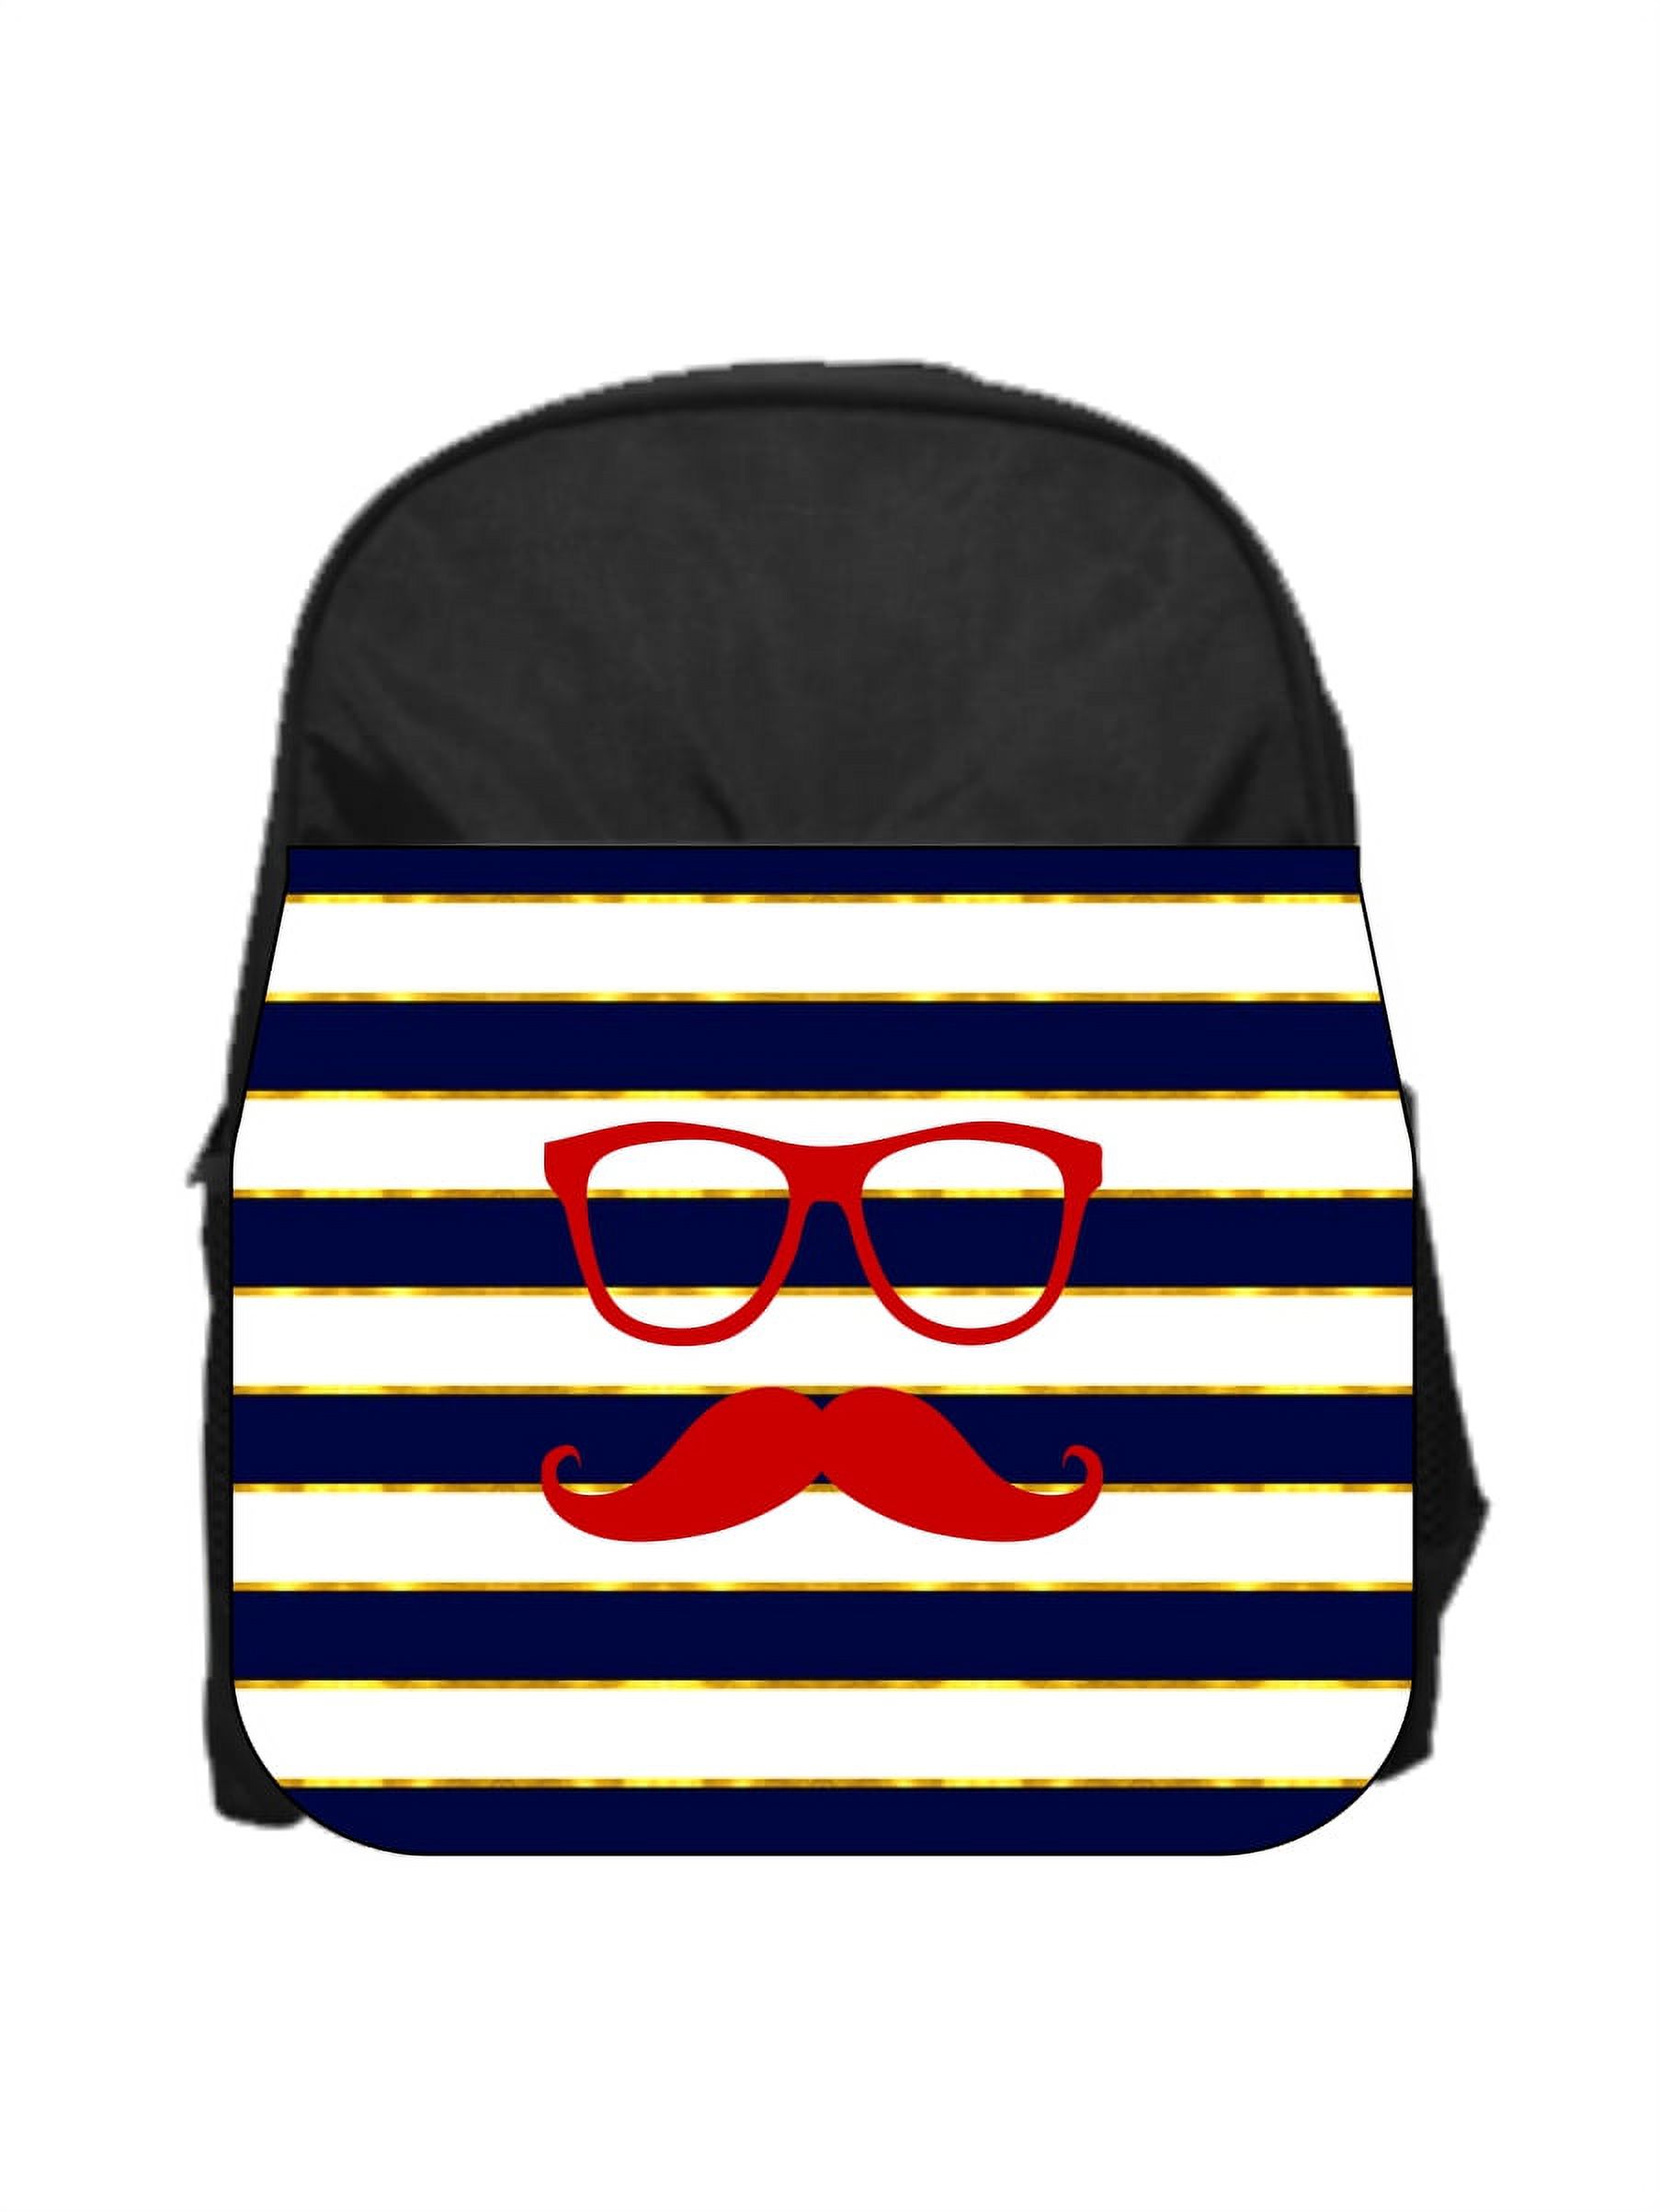 Hipster Elements Glasses and Mustache on Gilded Navy Stripes - 13" x 10" Black Preschool Toddler Children's Backpack - image 1 of 2